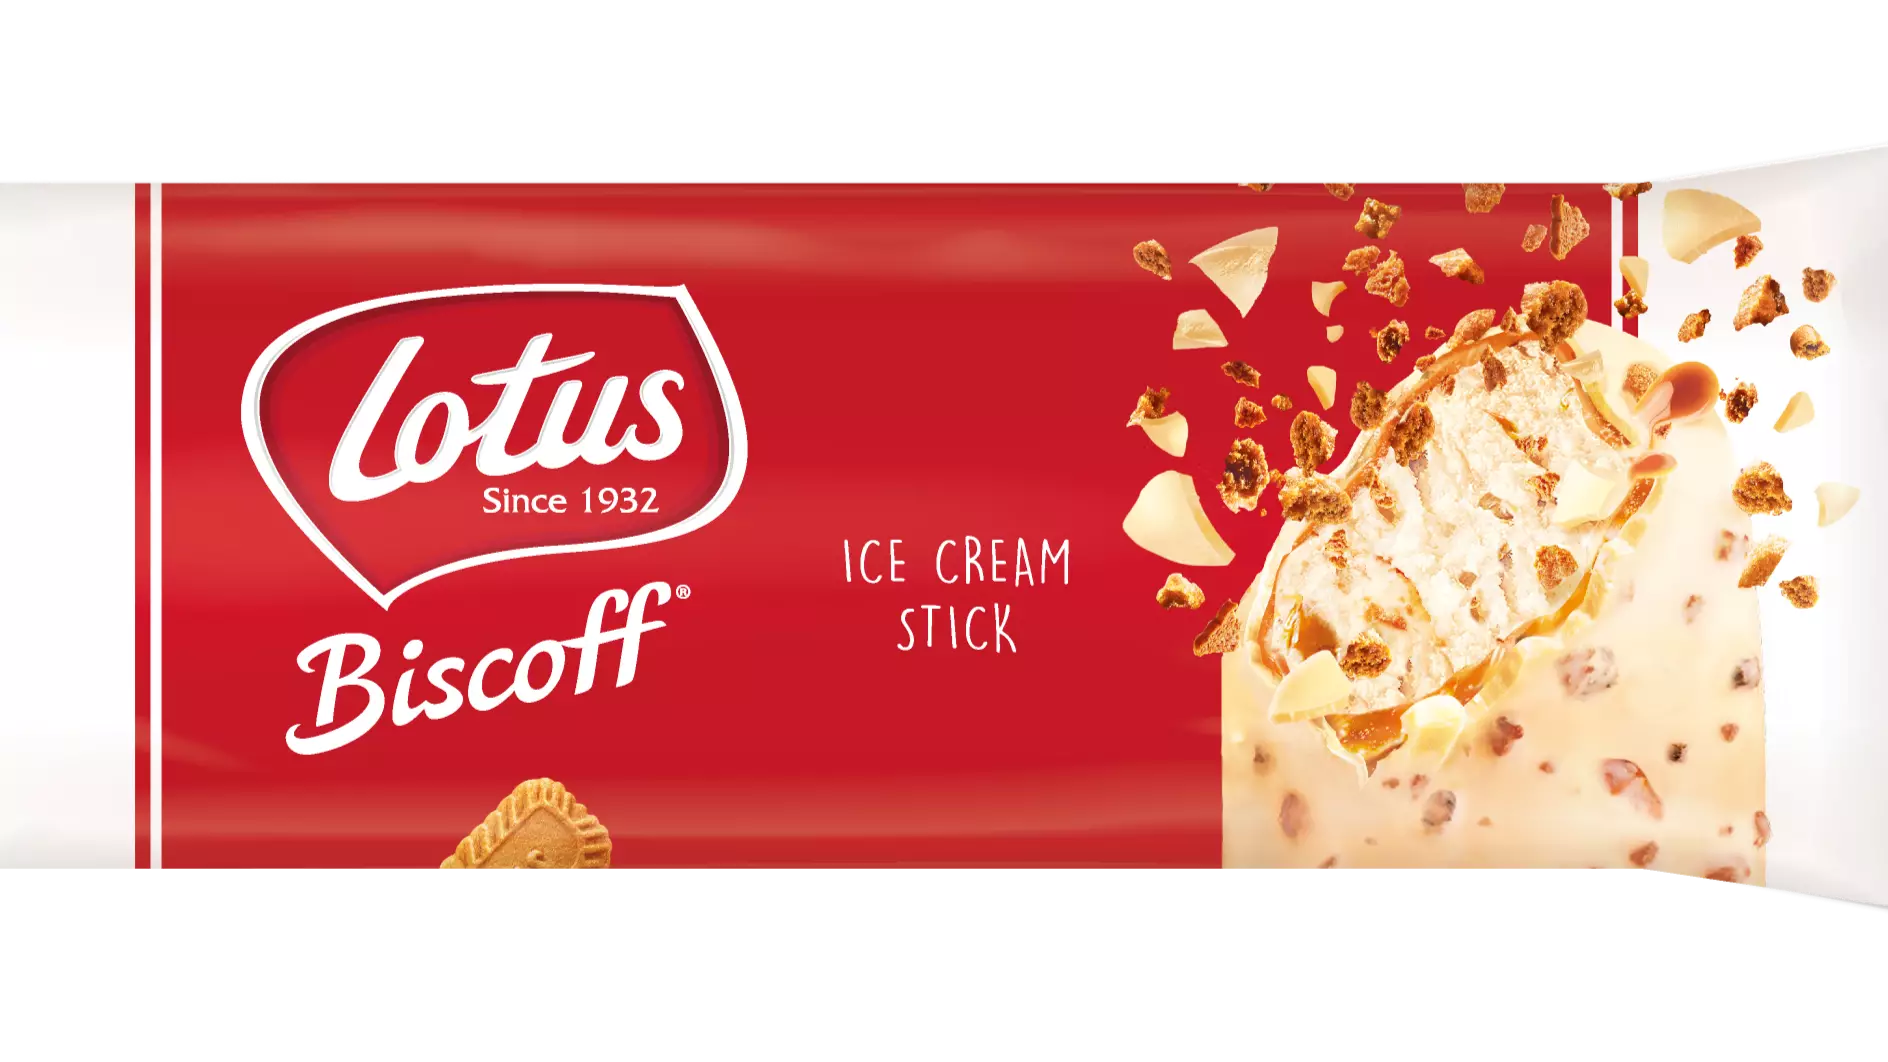 Lotus Biscoff Launches New White Chocolate Ice Cream Sticks And Mini Tubs